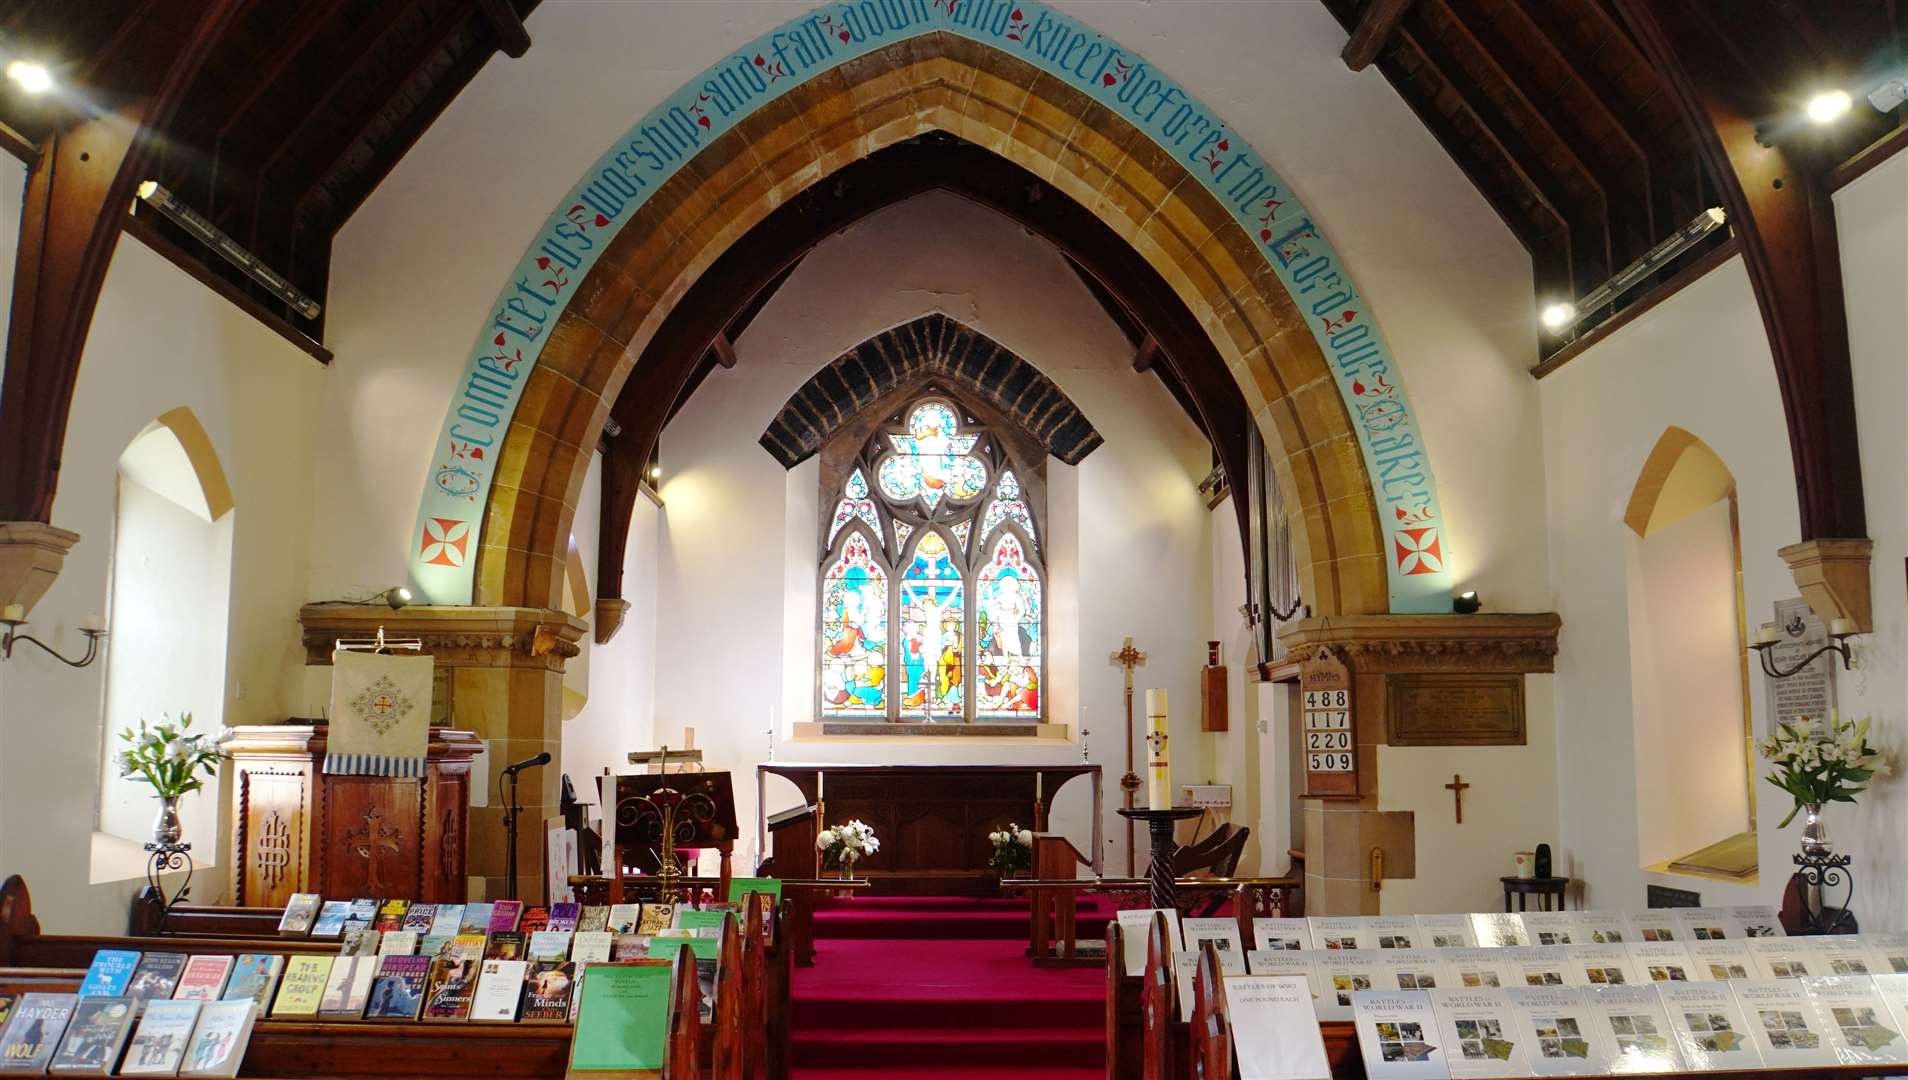 St John's Church interior.